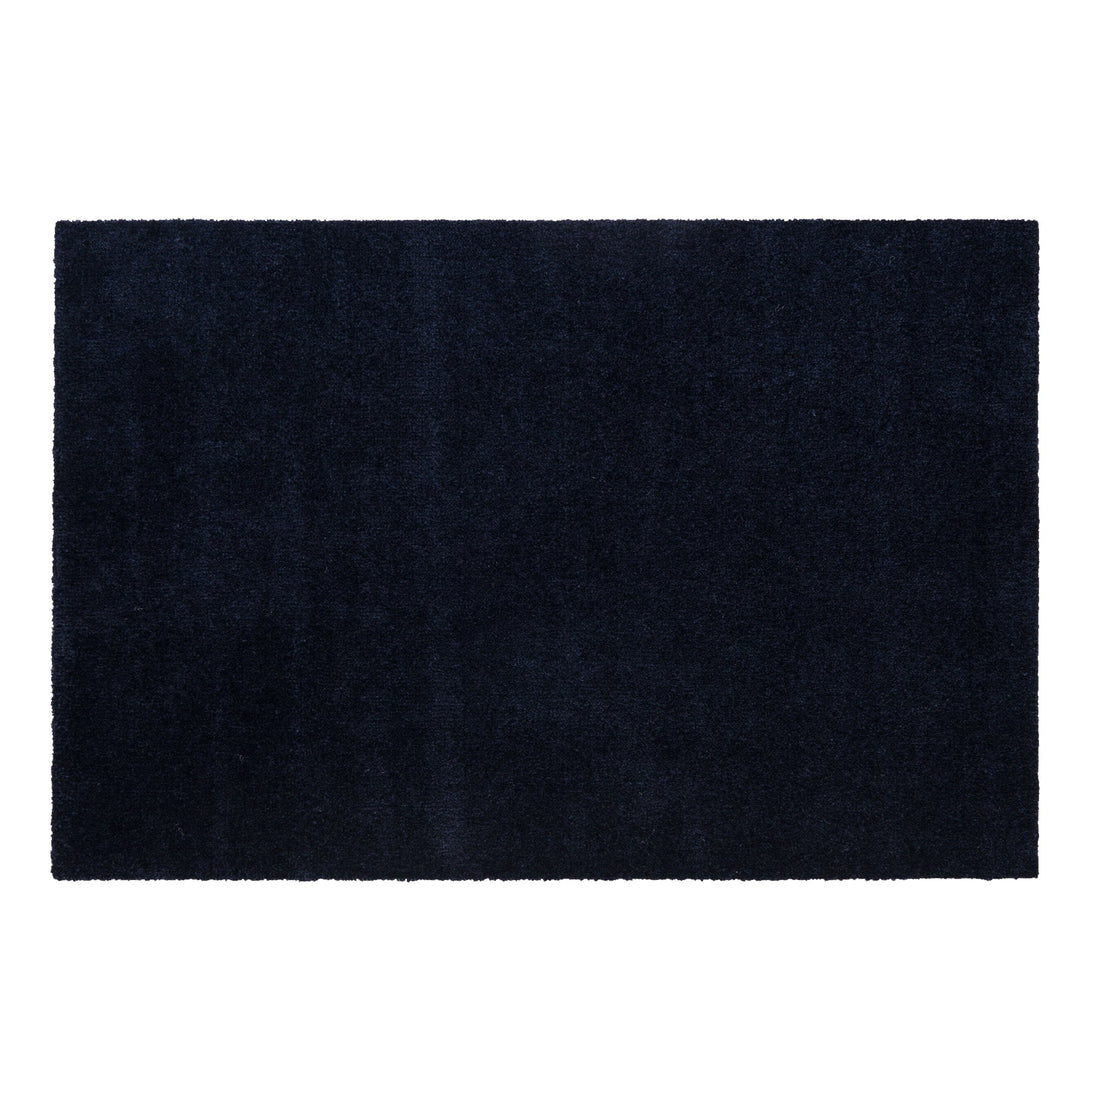 GUL MAT 60 x 90 cm - UNI COLOUR/BLUE